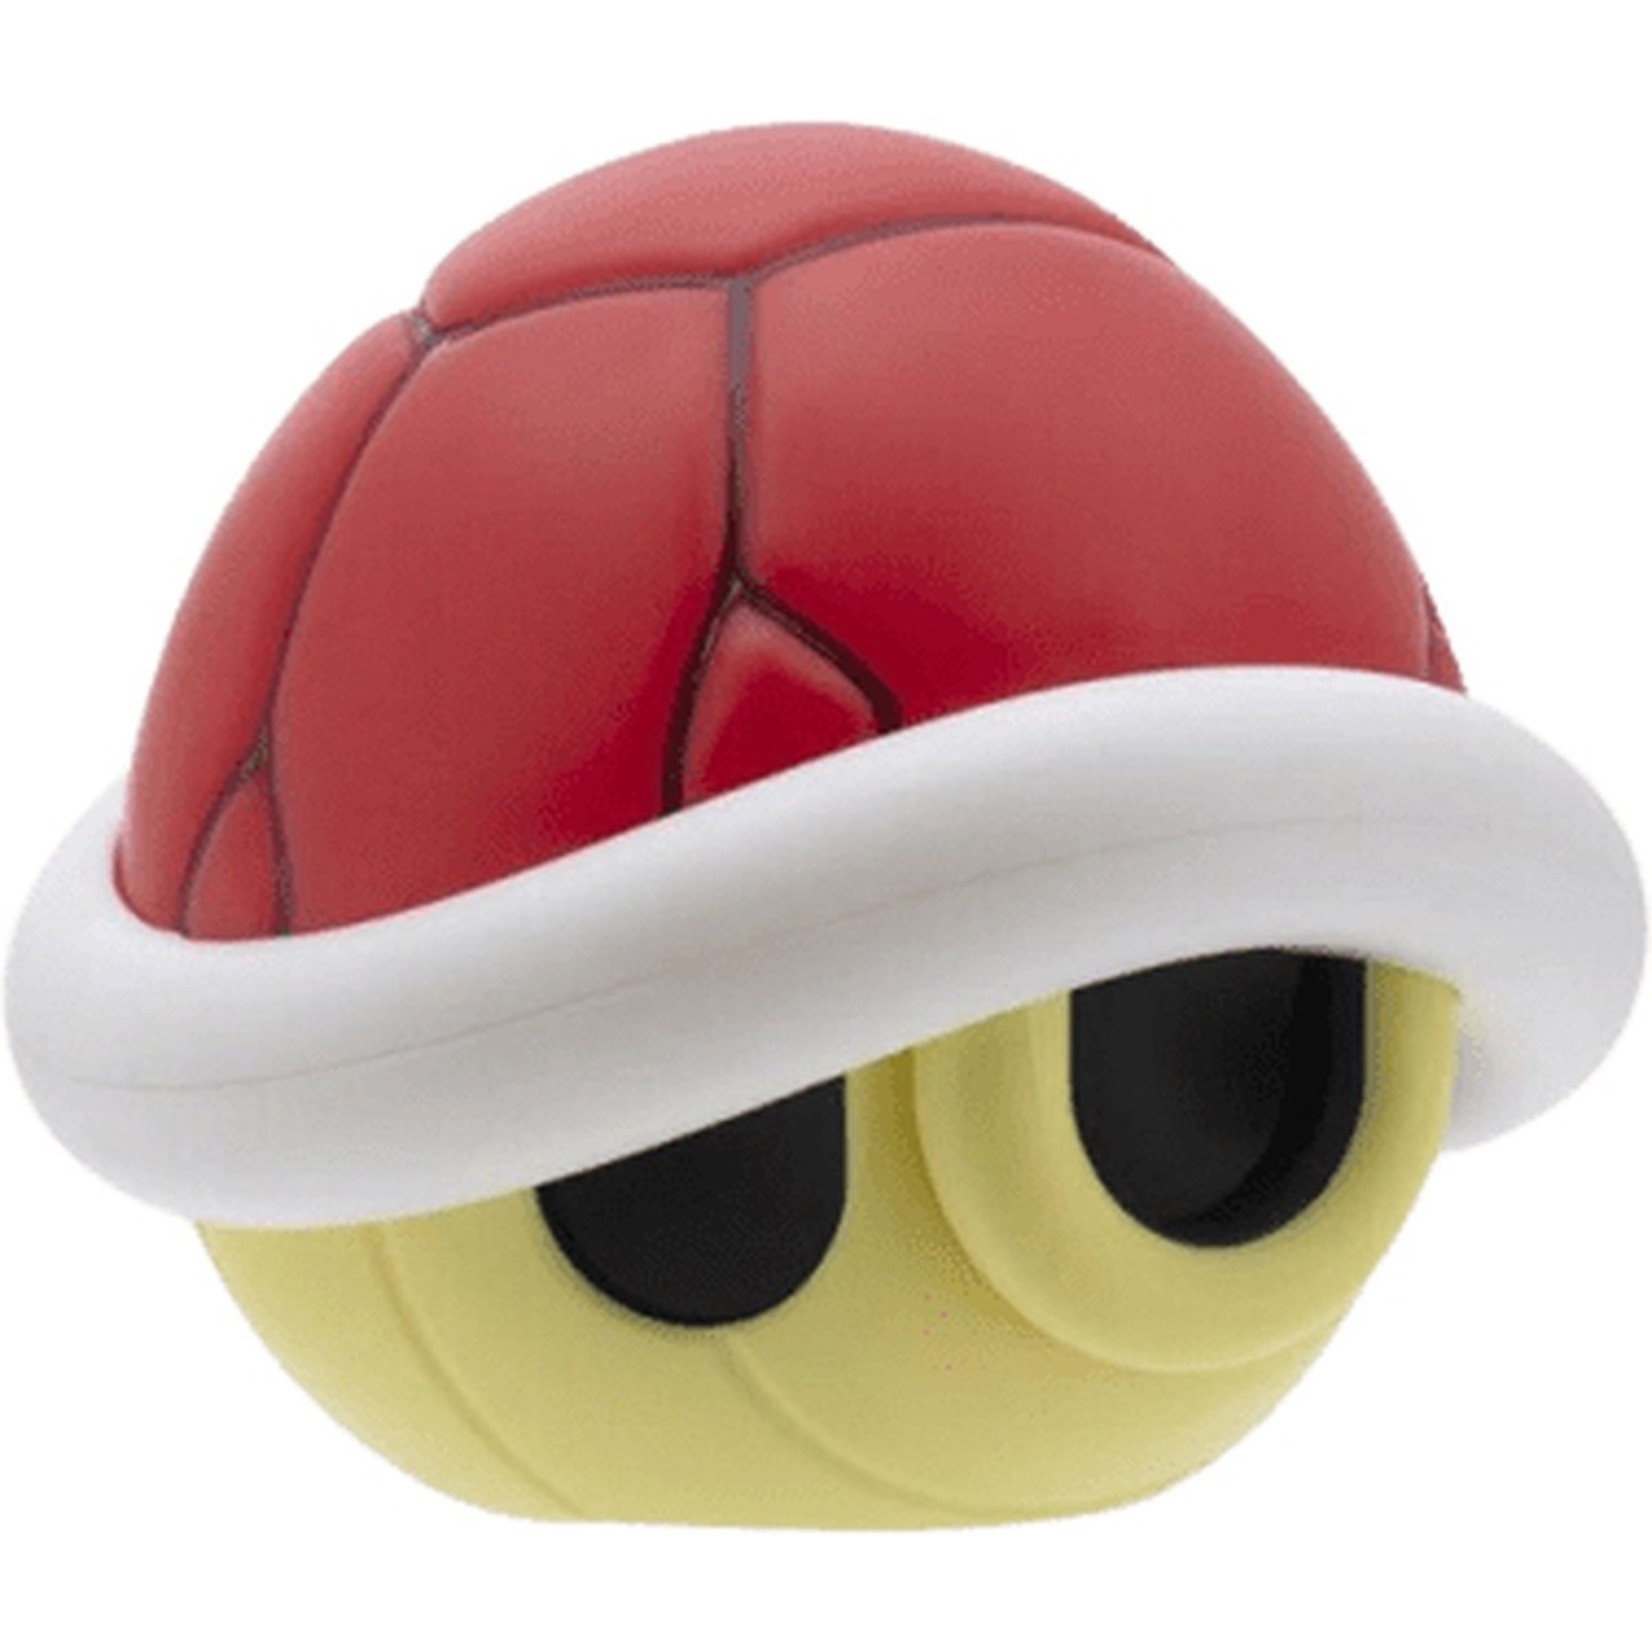 Paladone Paladone Nintendo Mariokart Red Shell Light